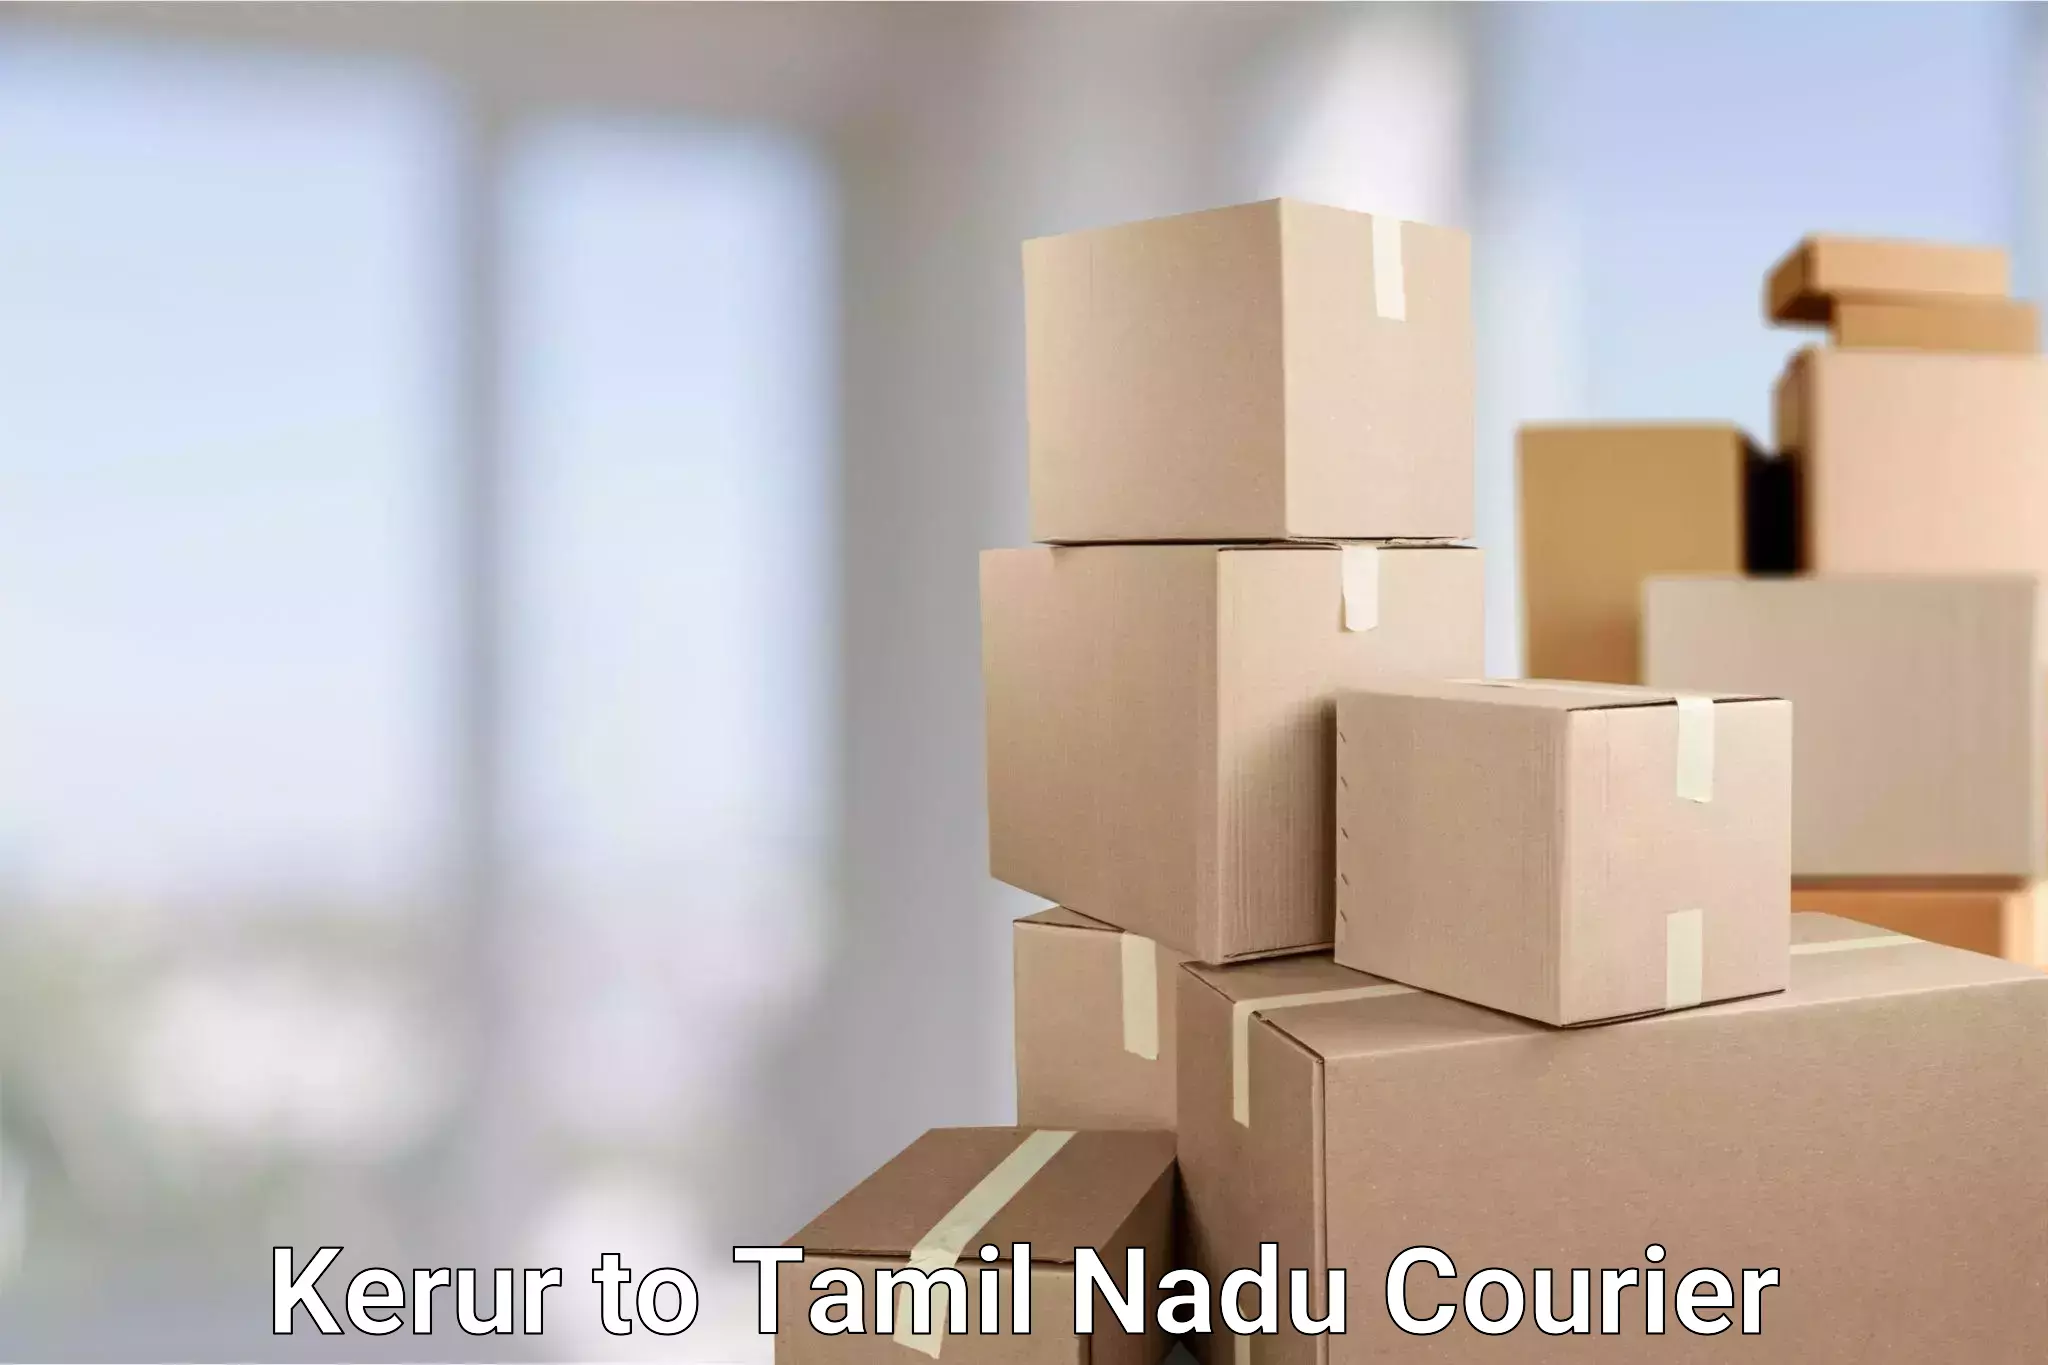 Specialized shipment handling Kerur to Thiruvarur